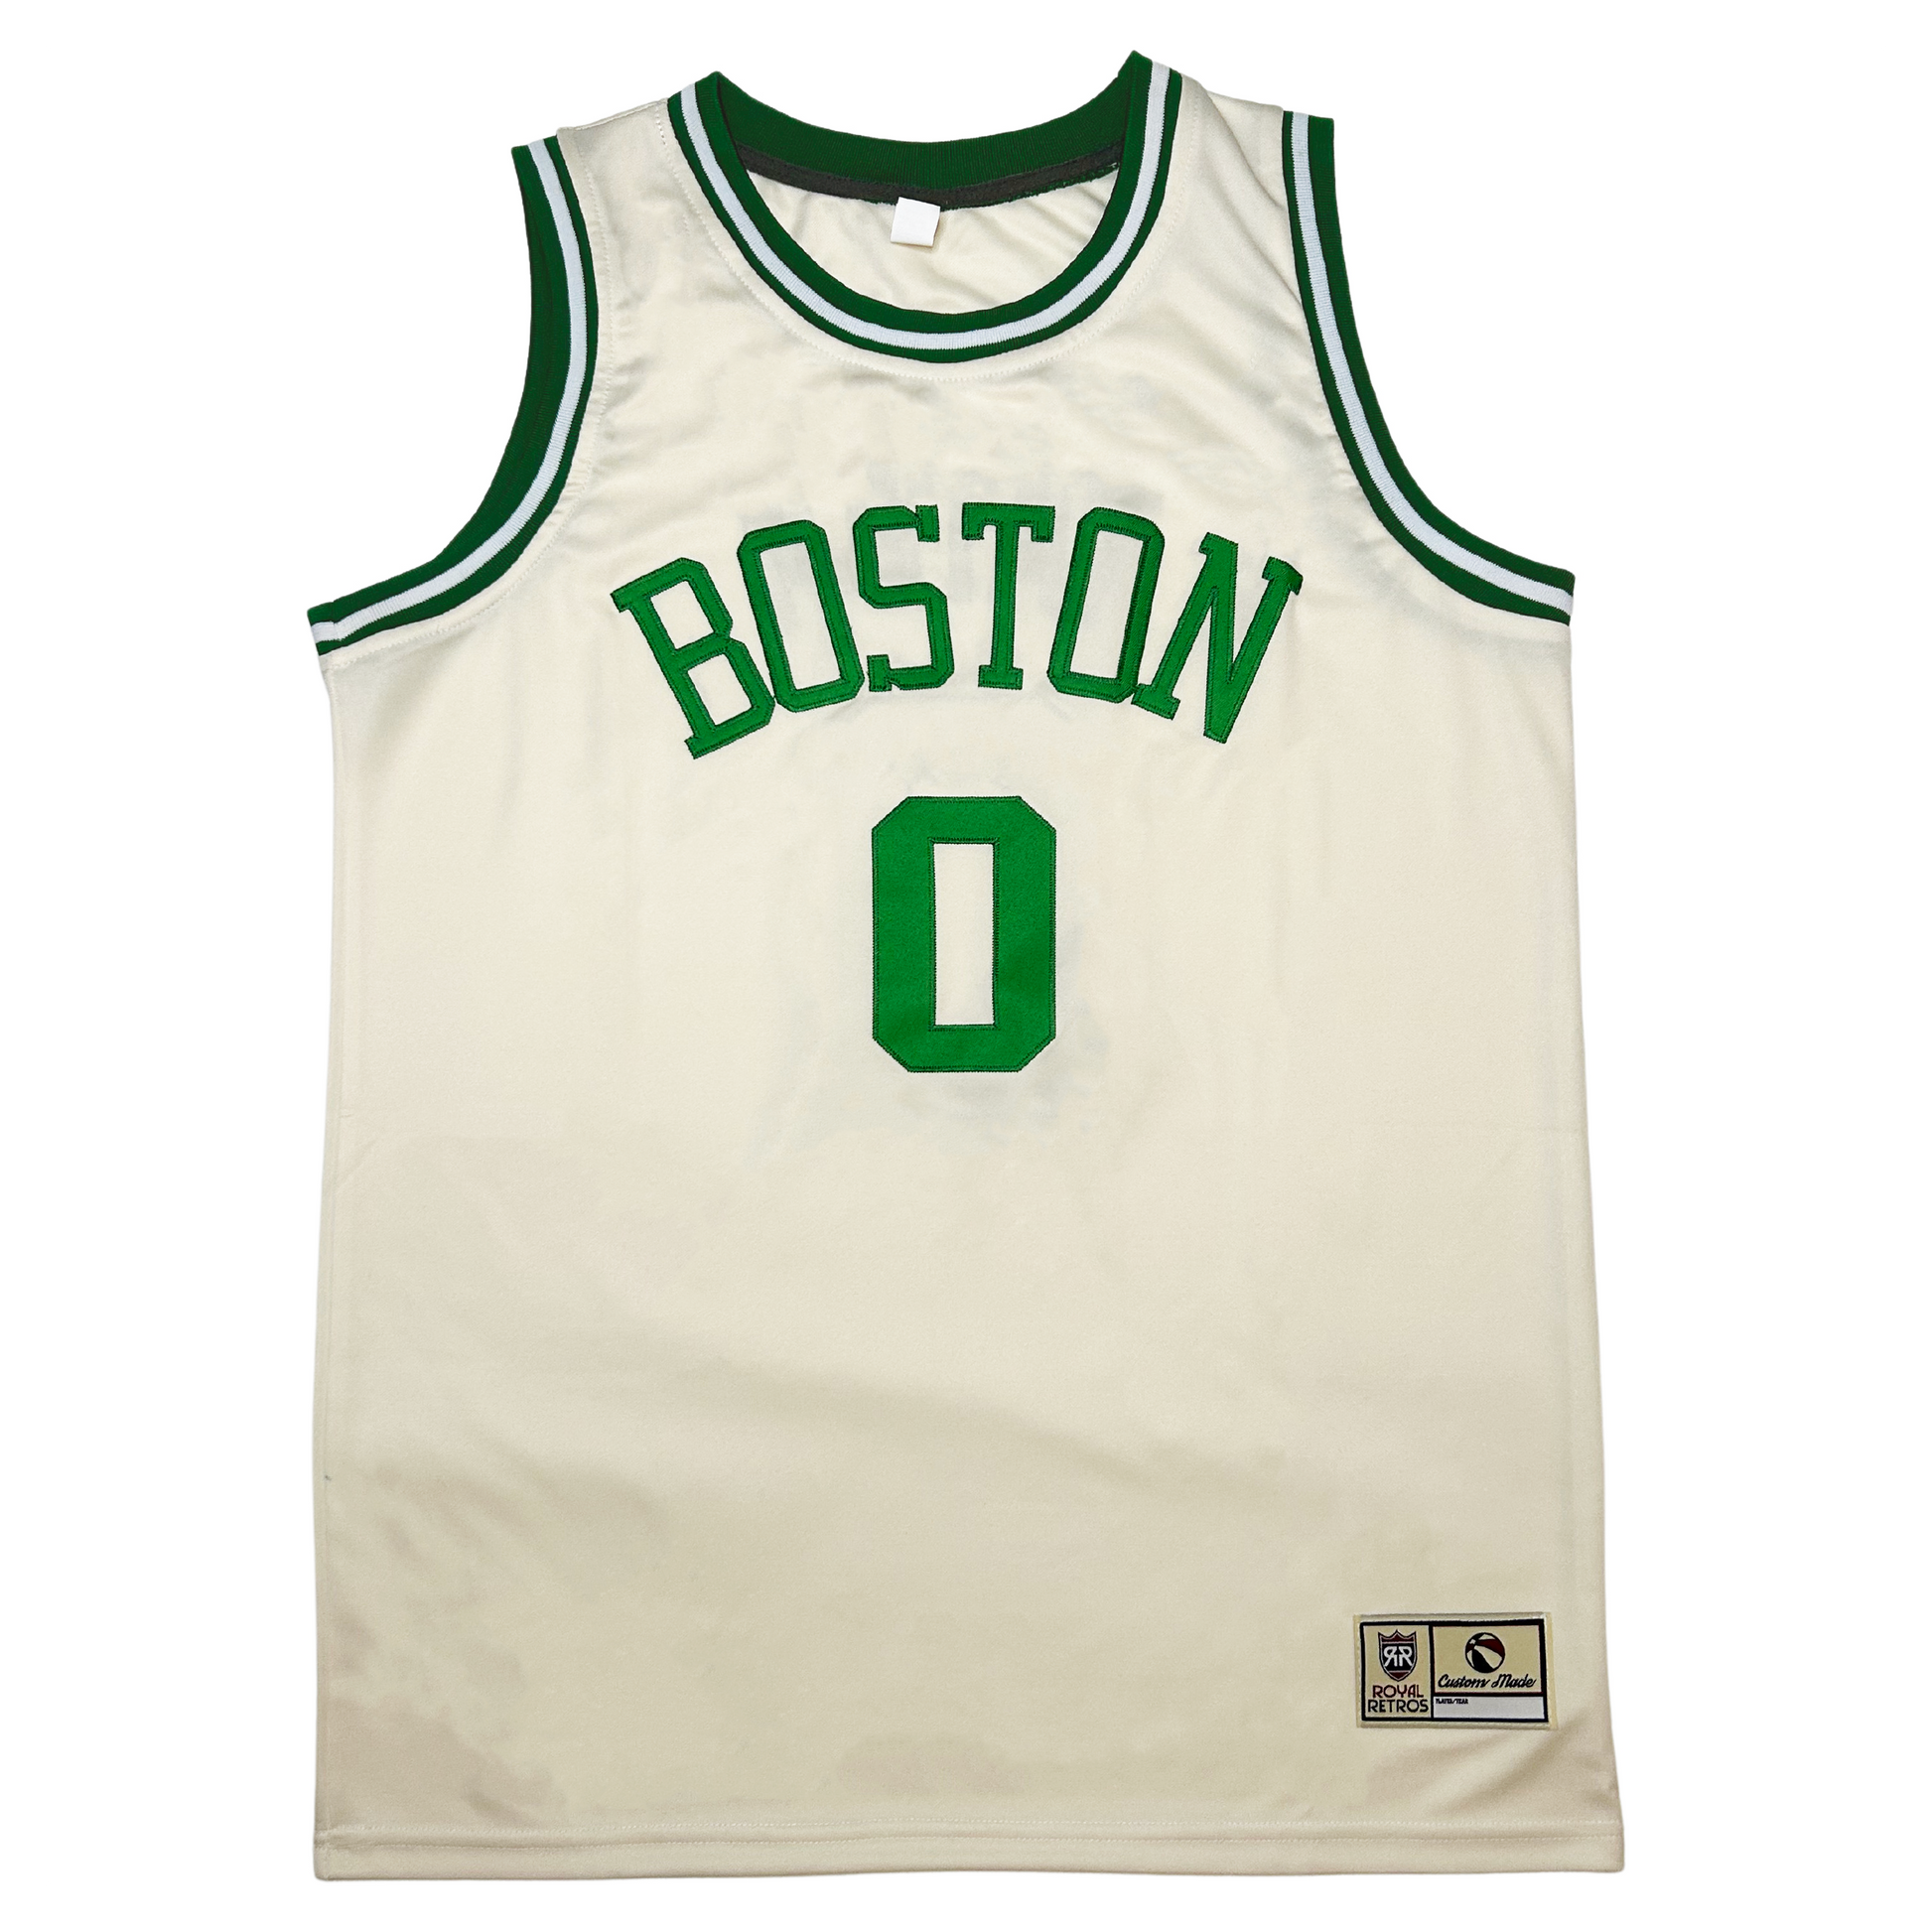 Custom Boston Celtics Jerseys and Custom Boston Celtics Uniforms